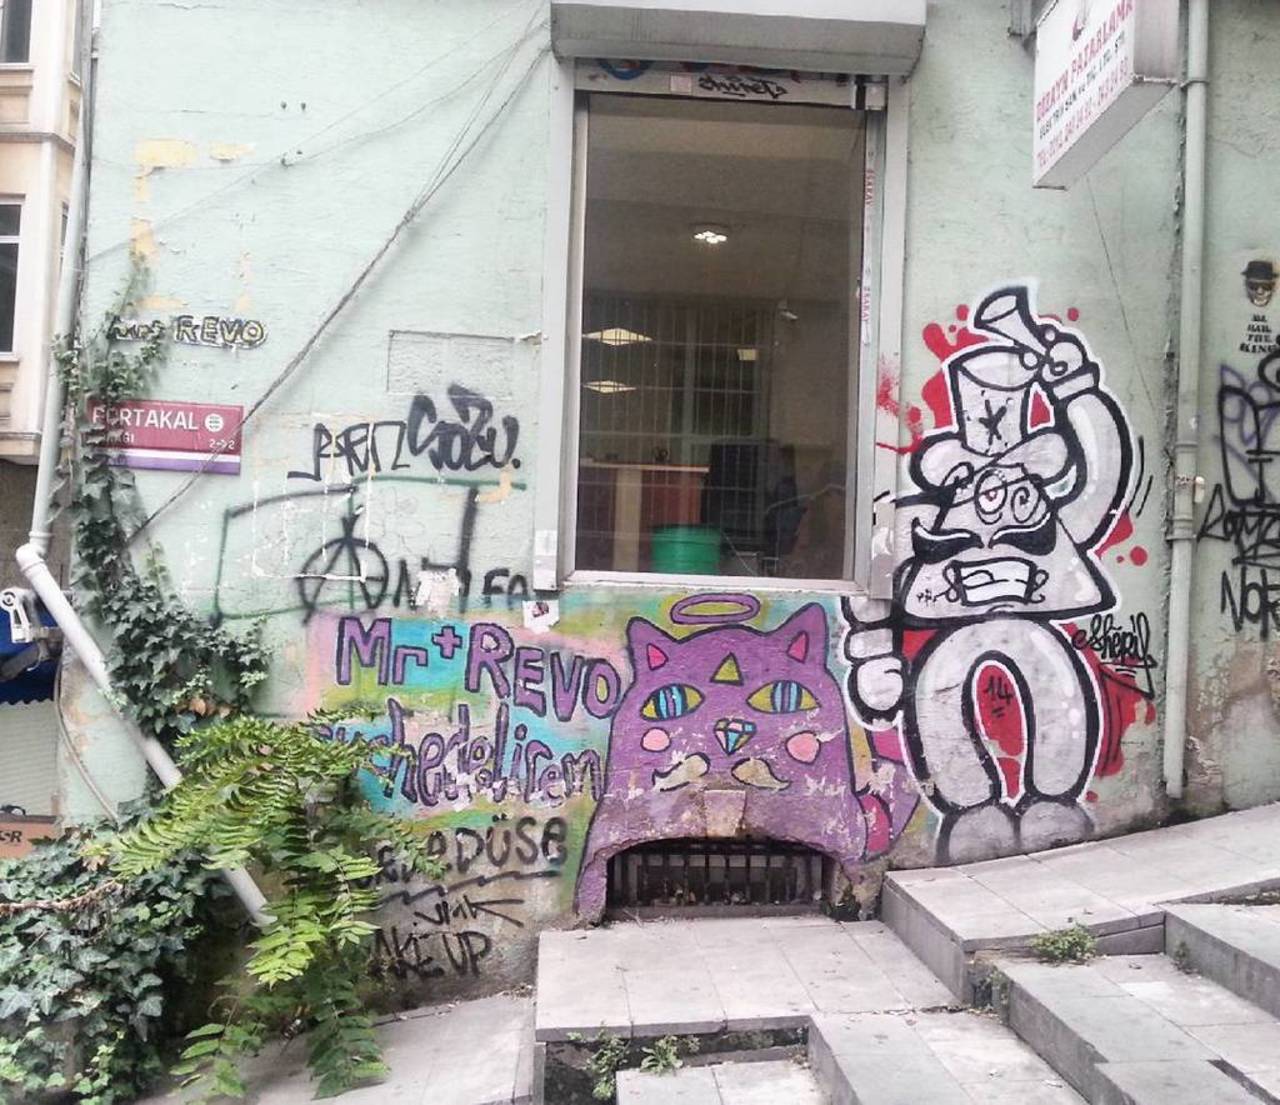 #streetart #graffiti #publicart #urbanart #sokaksanatı #streetartistanbul #istanbulstreetart #graffitiart by wallen… http://t.co/iDLr59I3wz